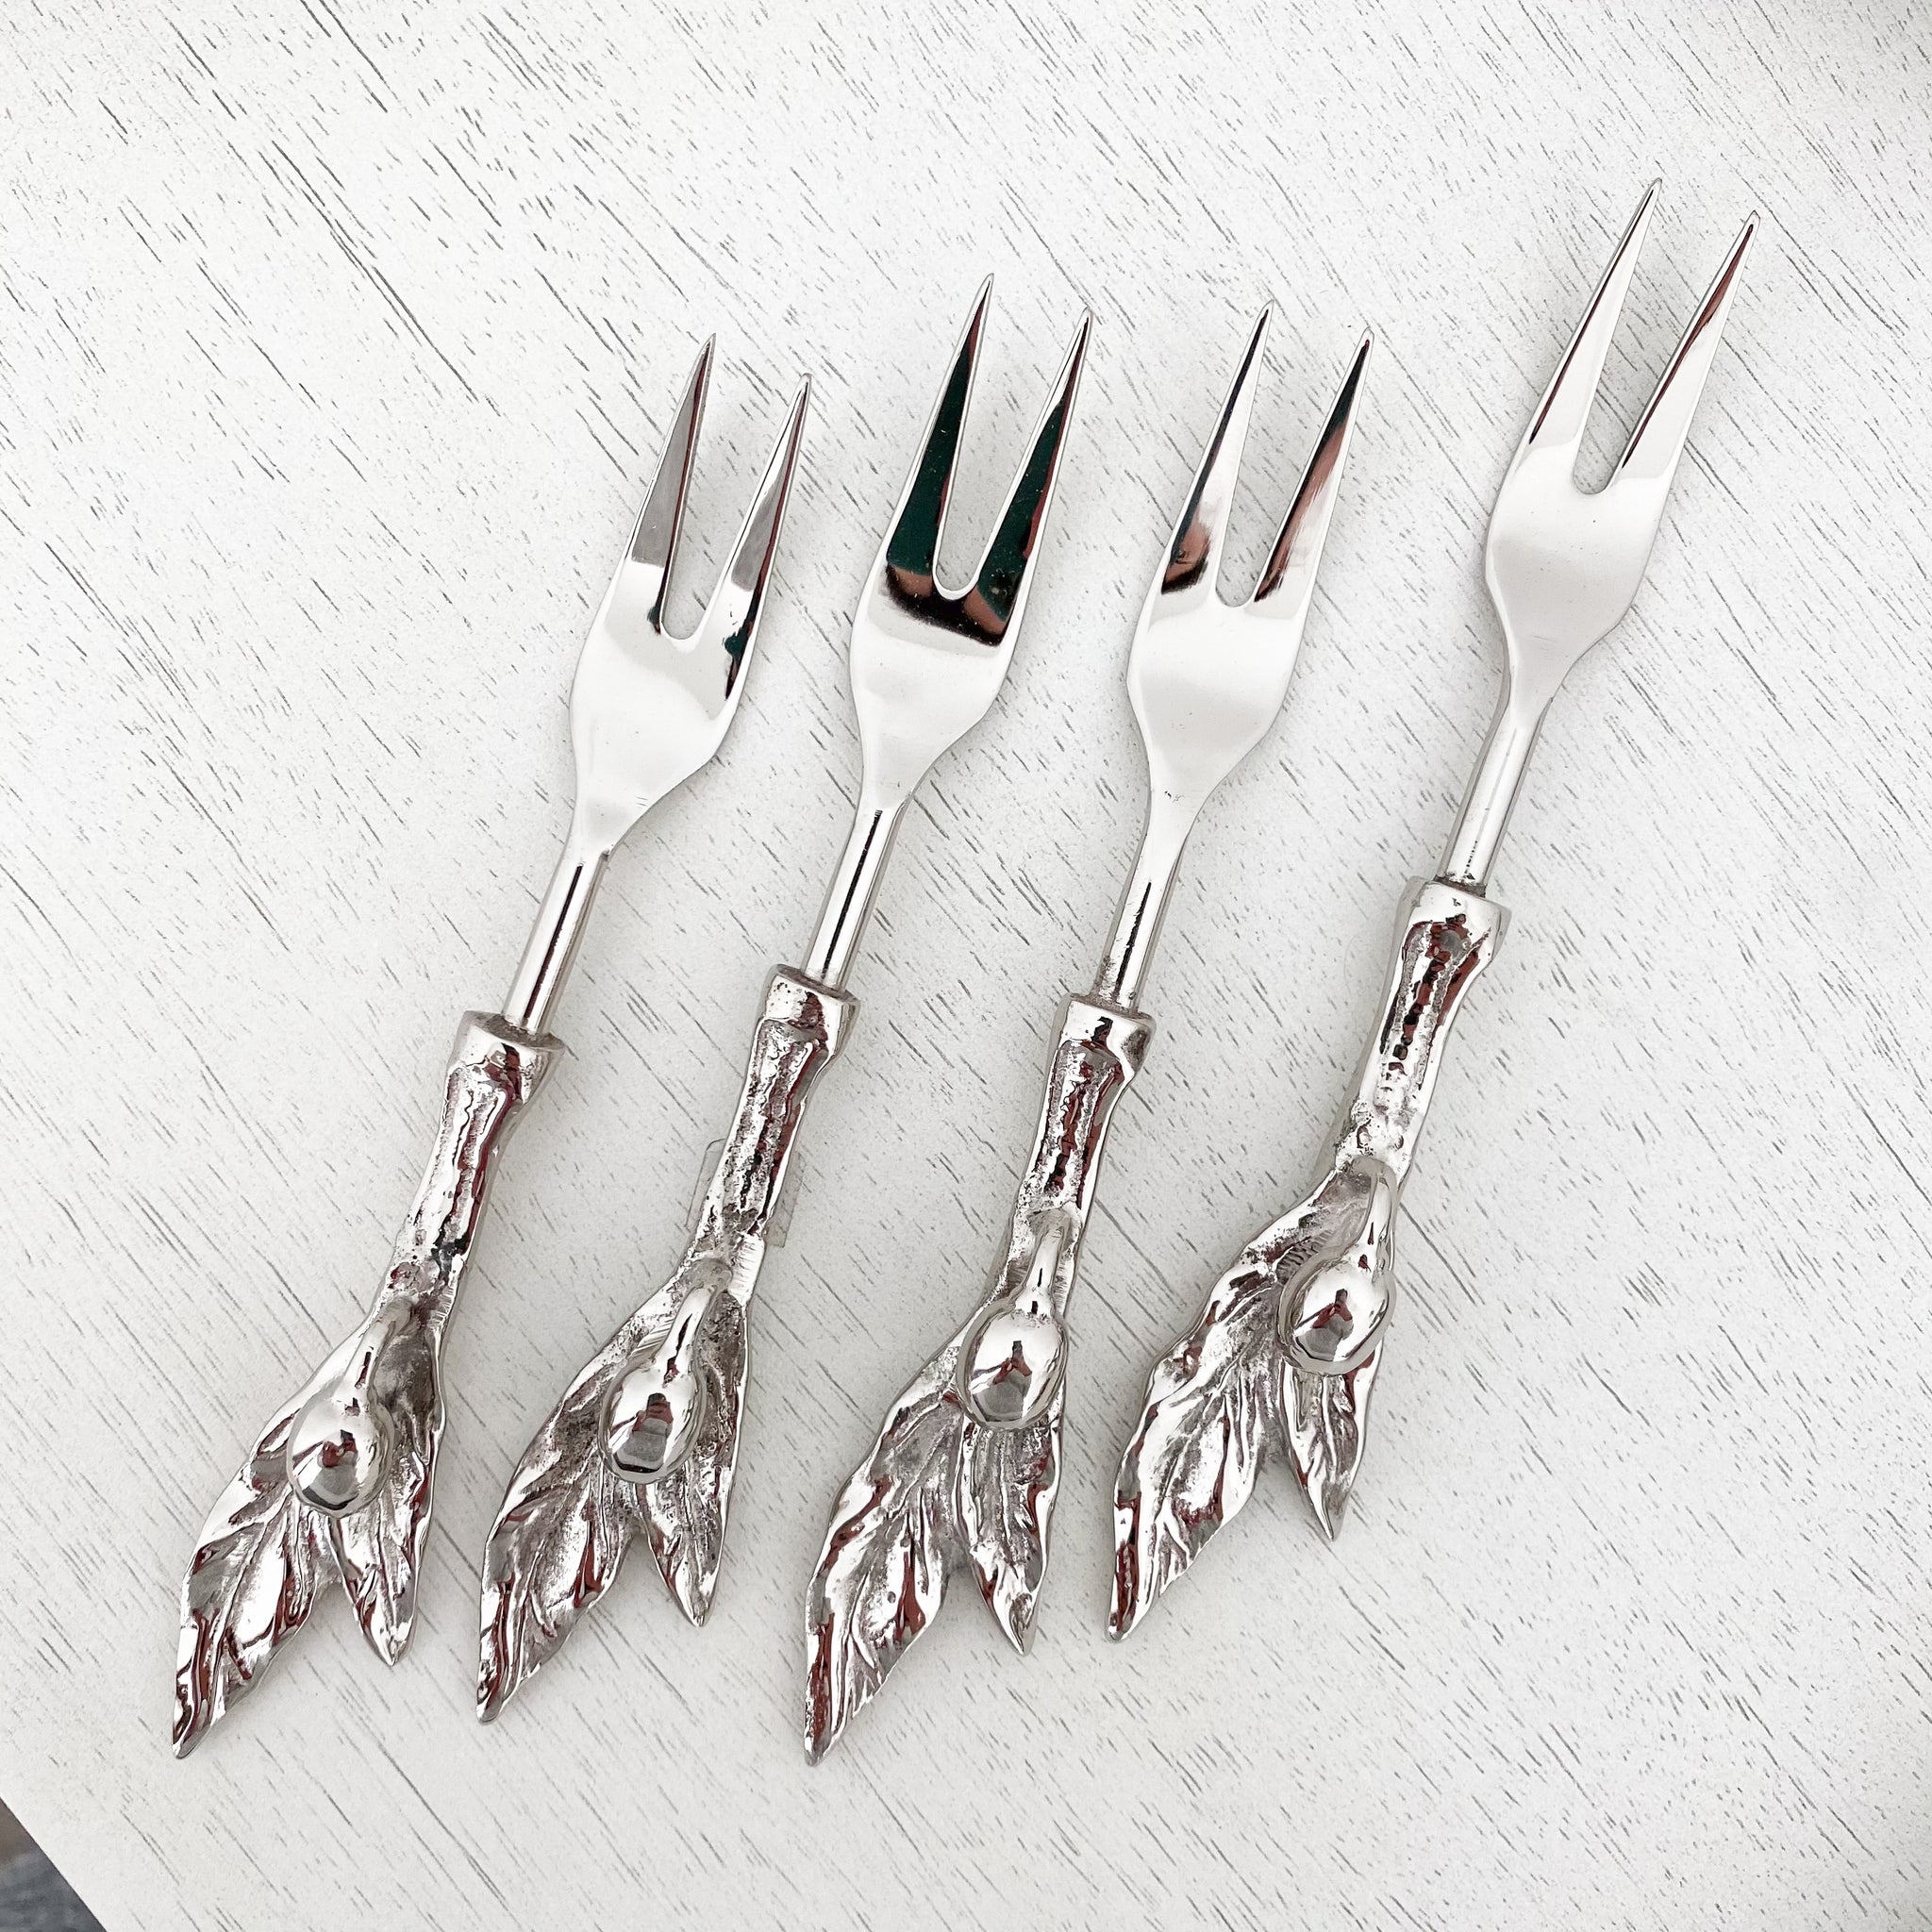 Oliveira Stainless Steel Forks (Set of 4)